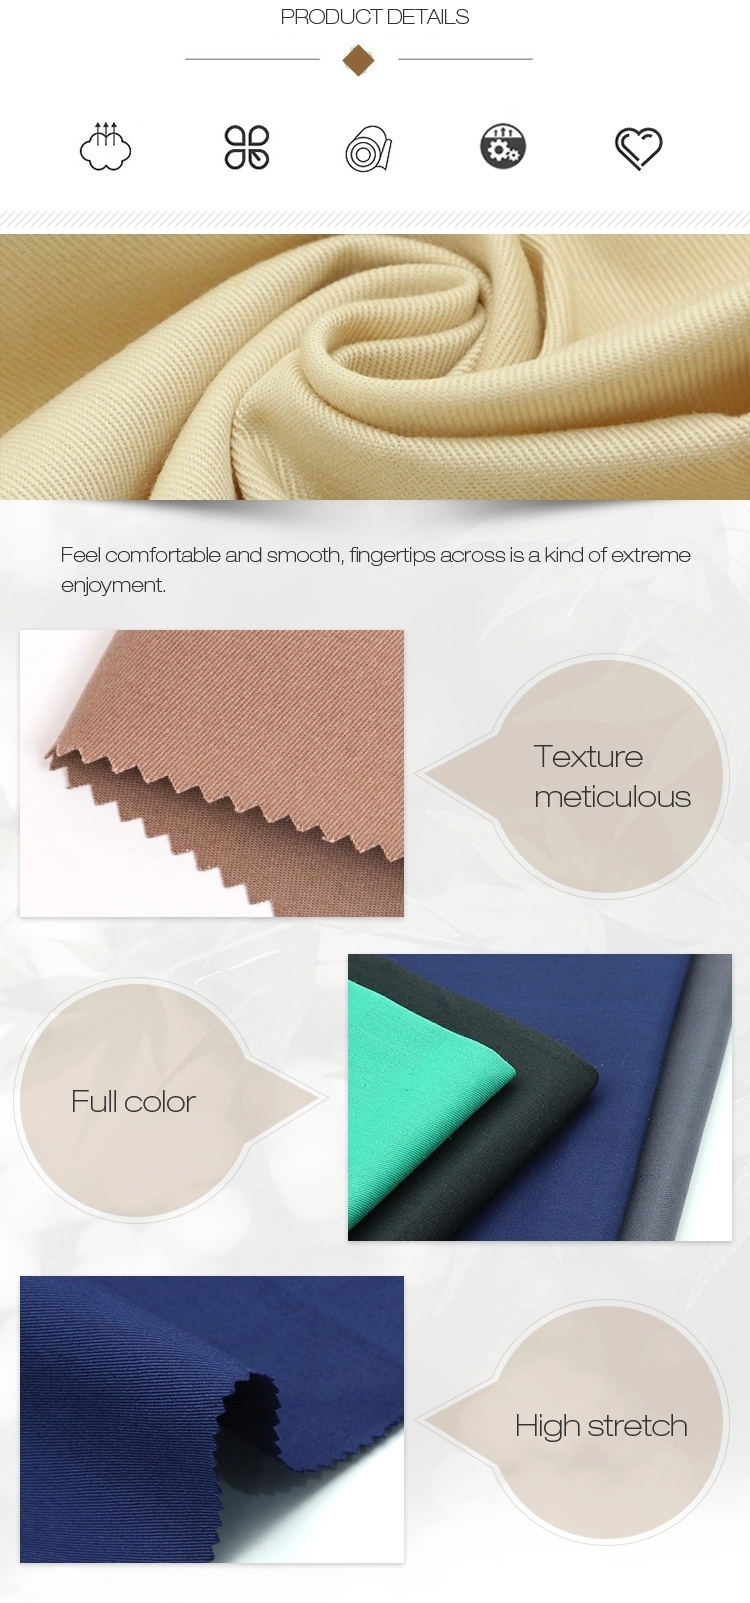 98% Cotton 2% Spandex Woven Fabric Custom Dyed Cotton Spandex Fabric